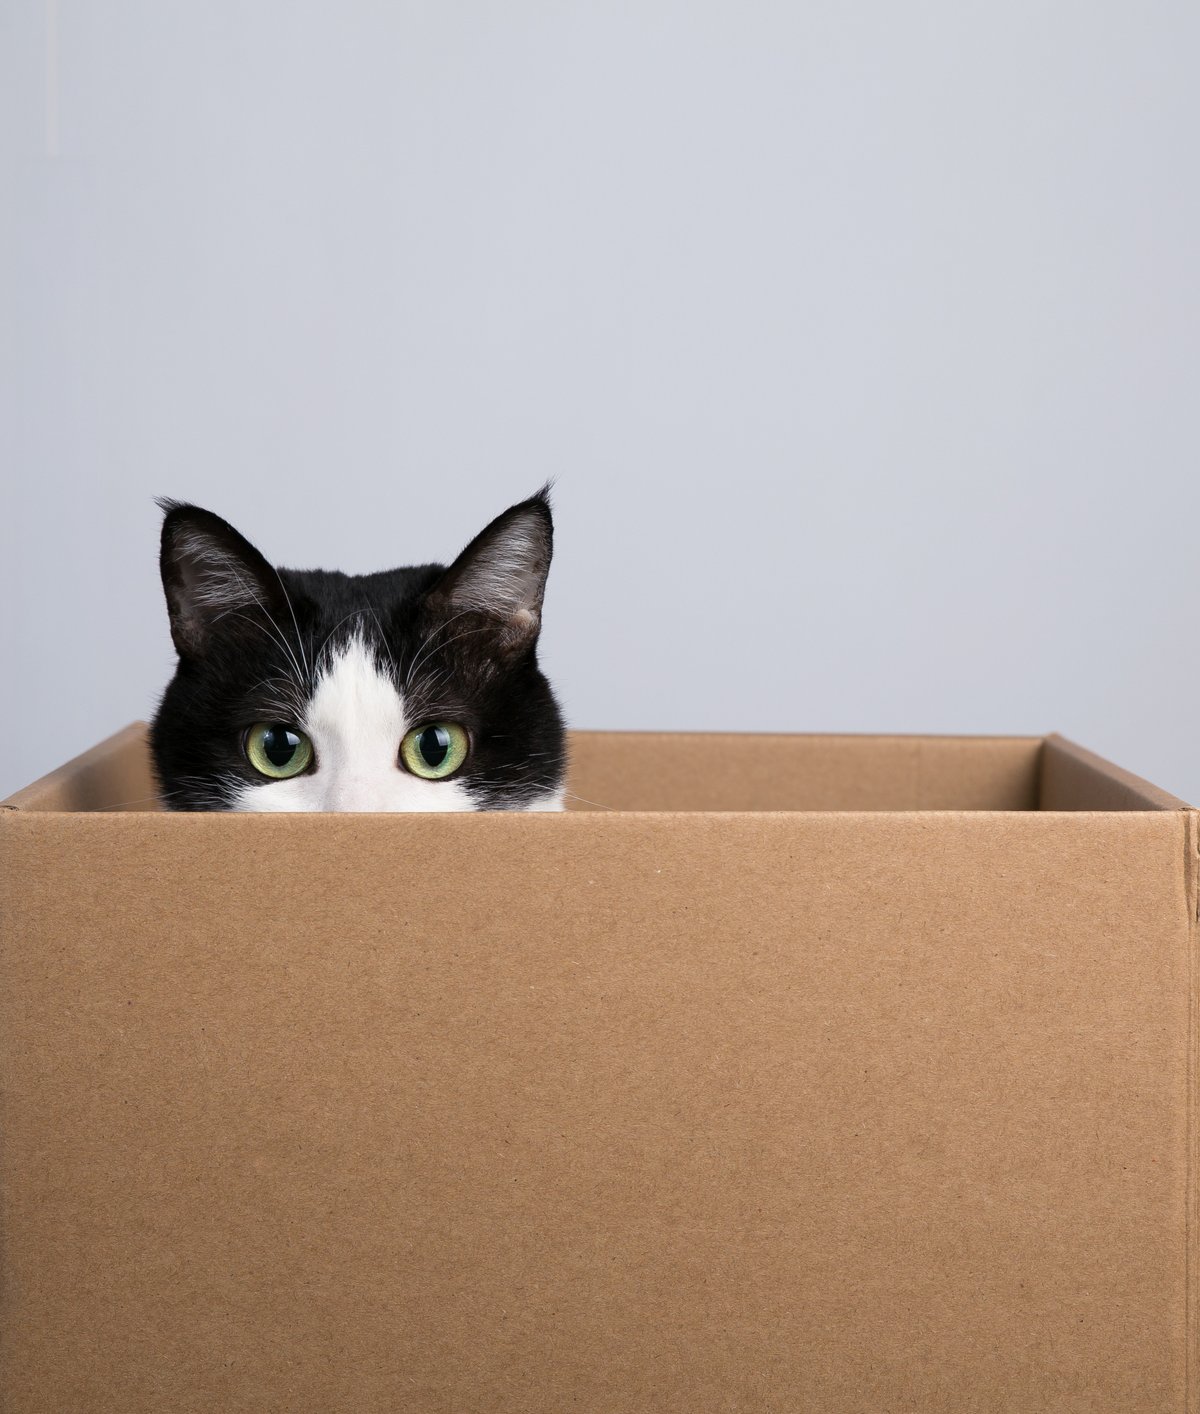 The science behind Schrödinger's cat paradox